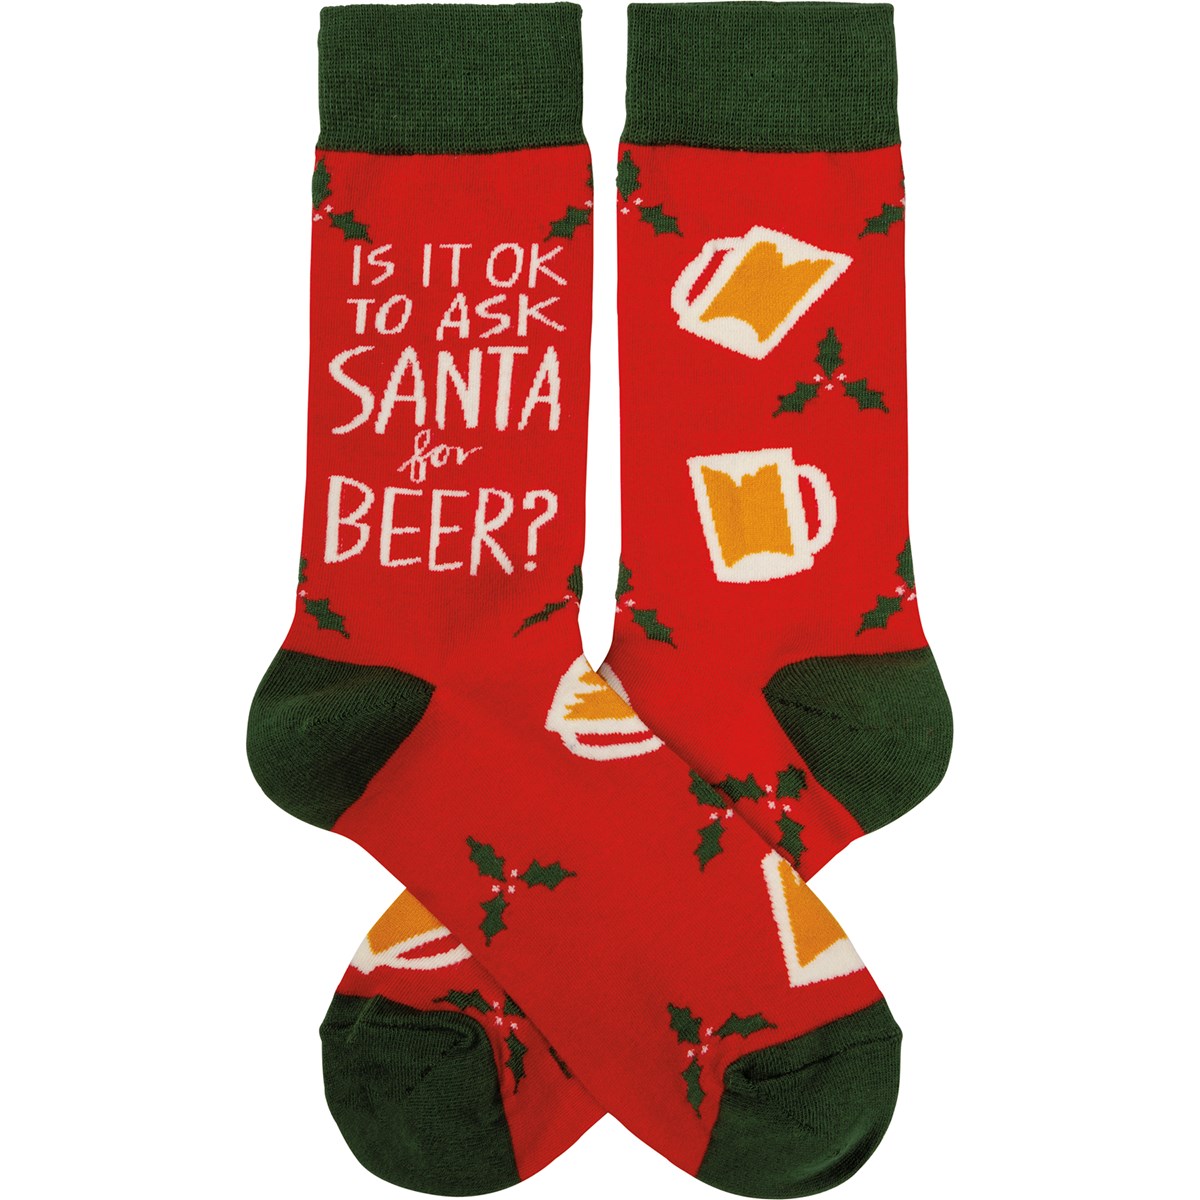 Is It Ok To Ask Santa For Beer Socks - Cotton, Nylon, Spandex